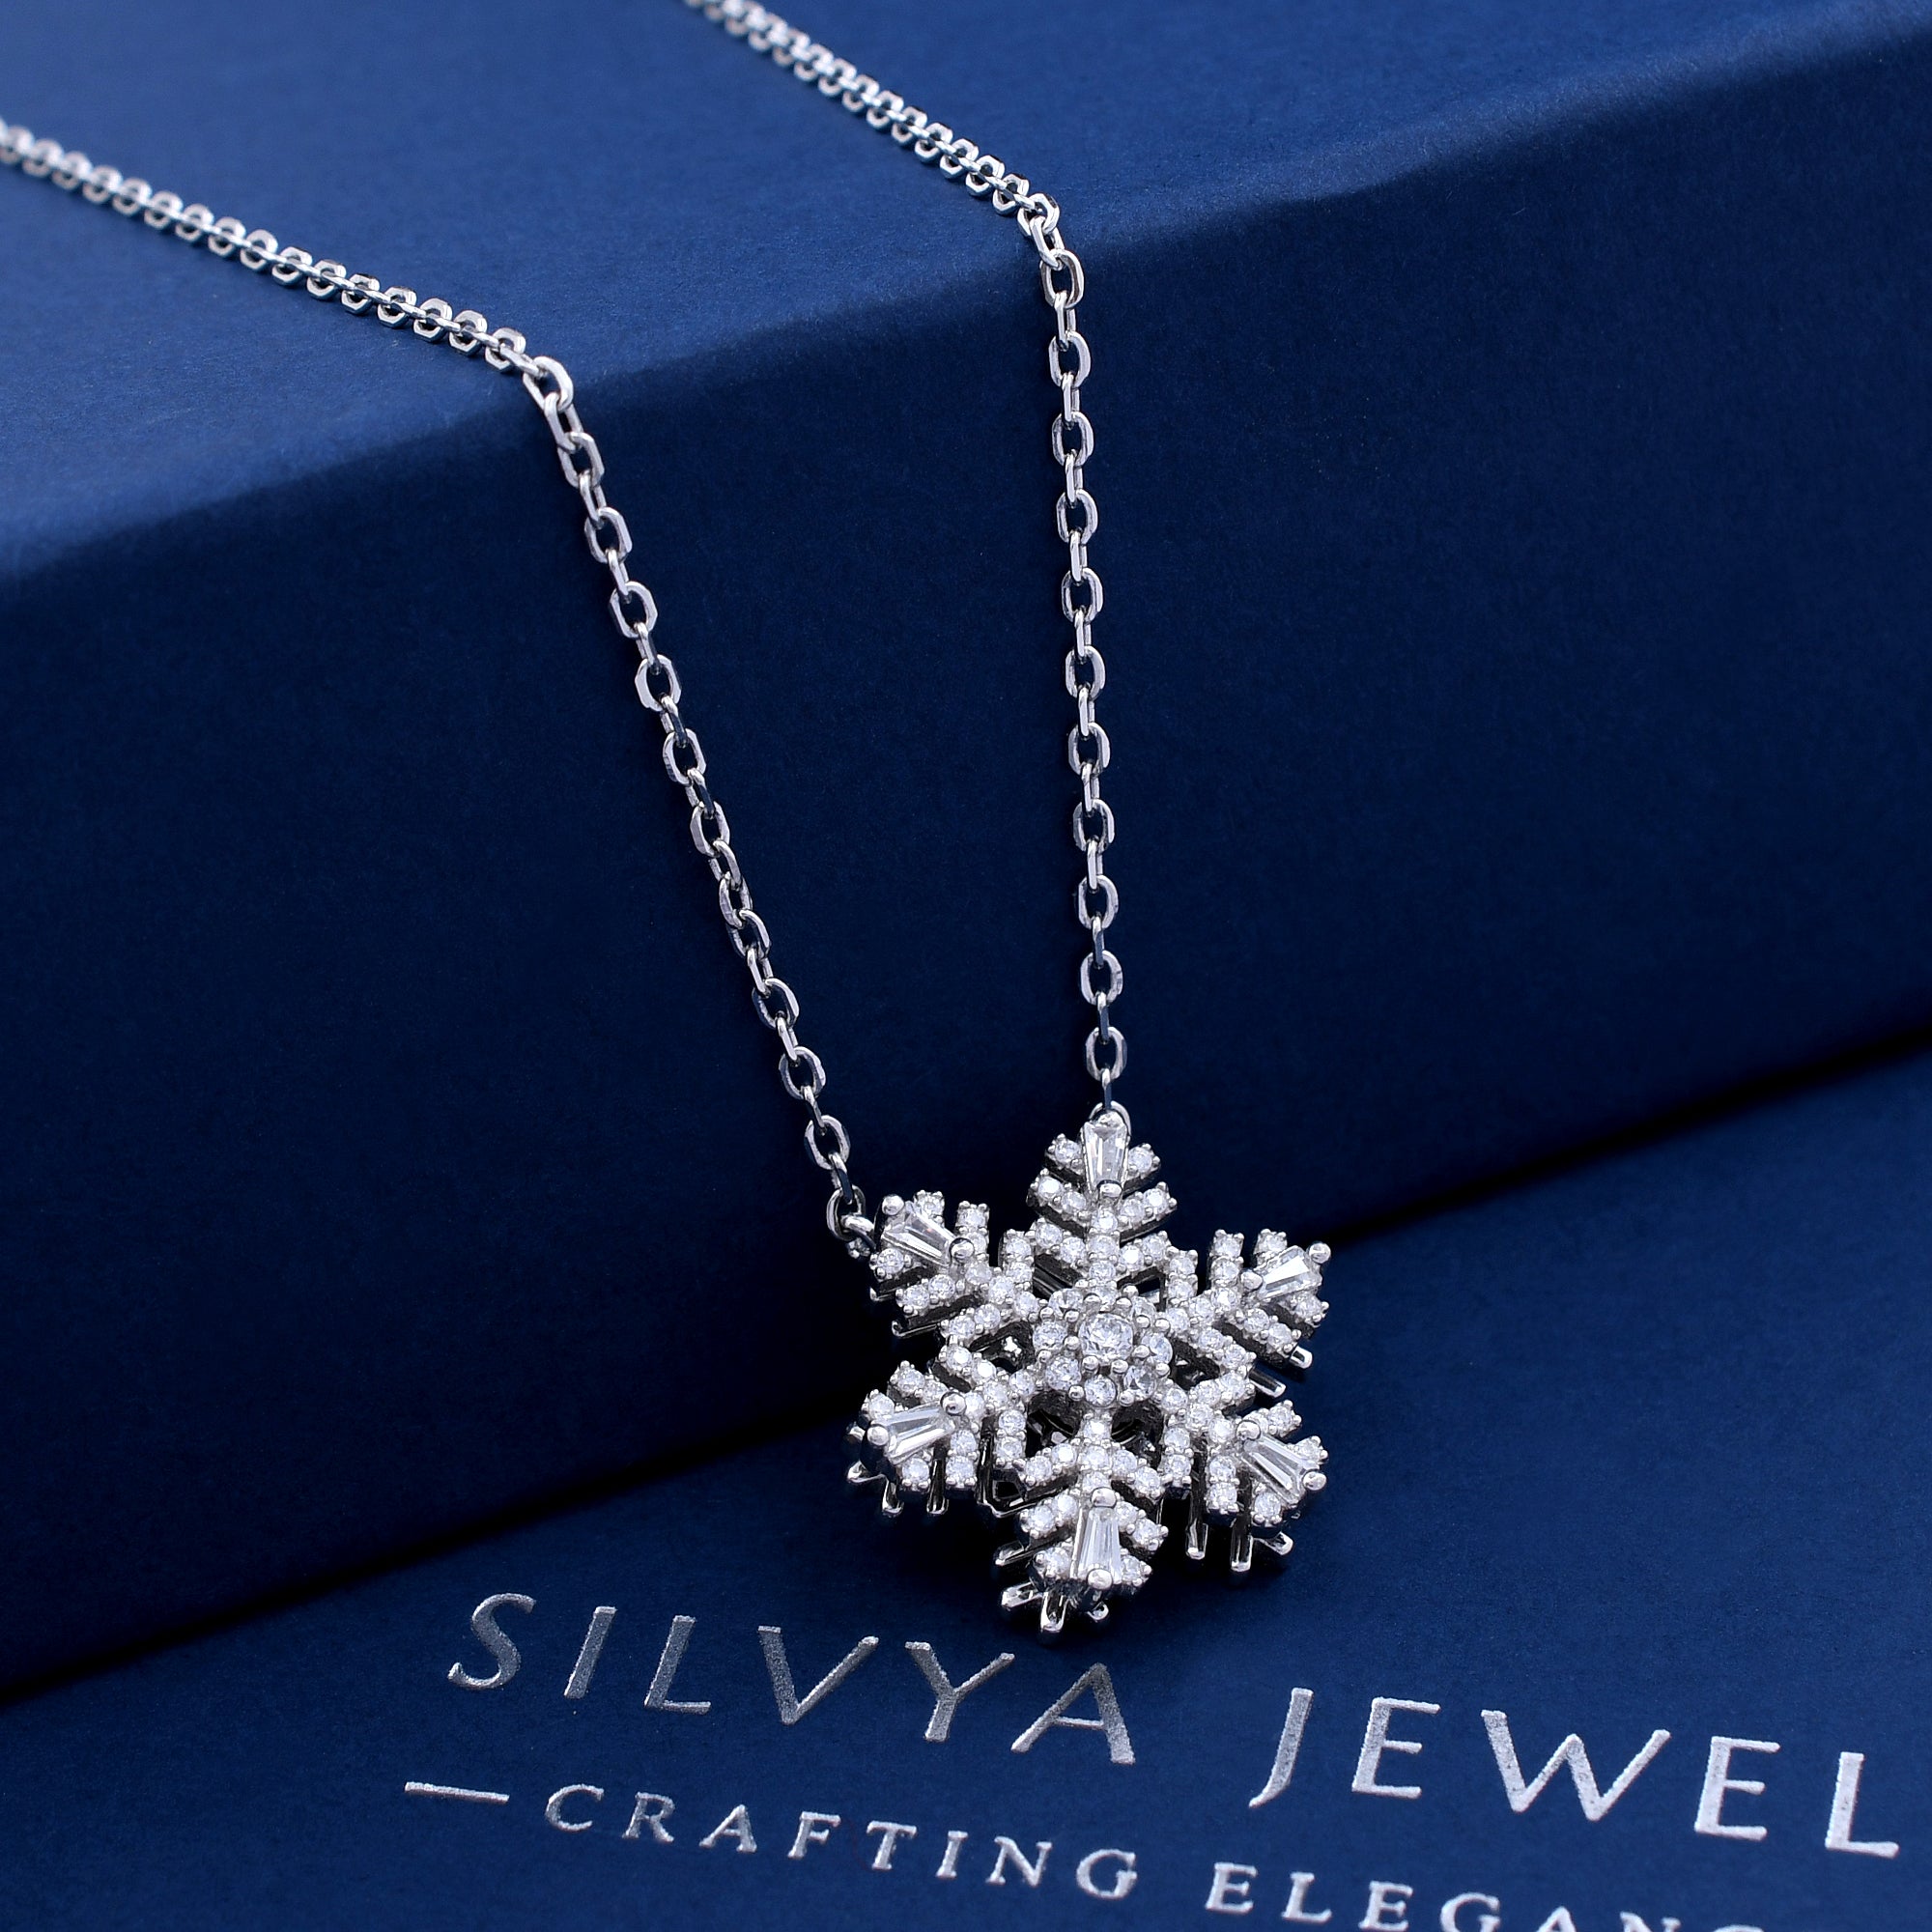 Snow Flower Design 925 Sterling Silver Pendant